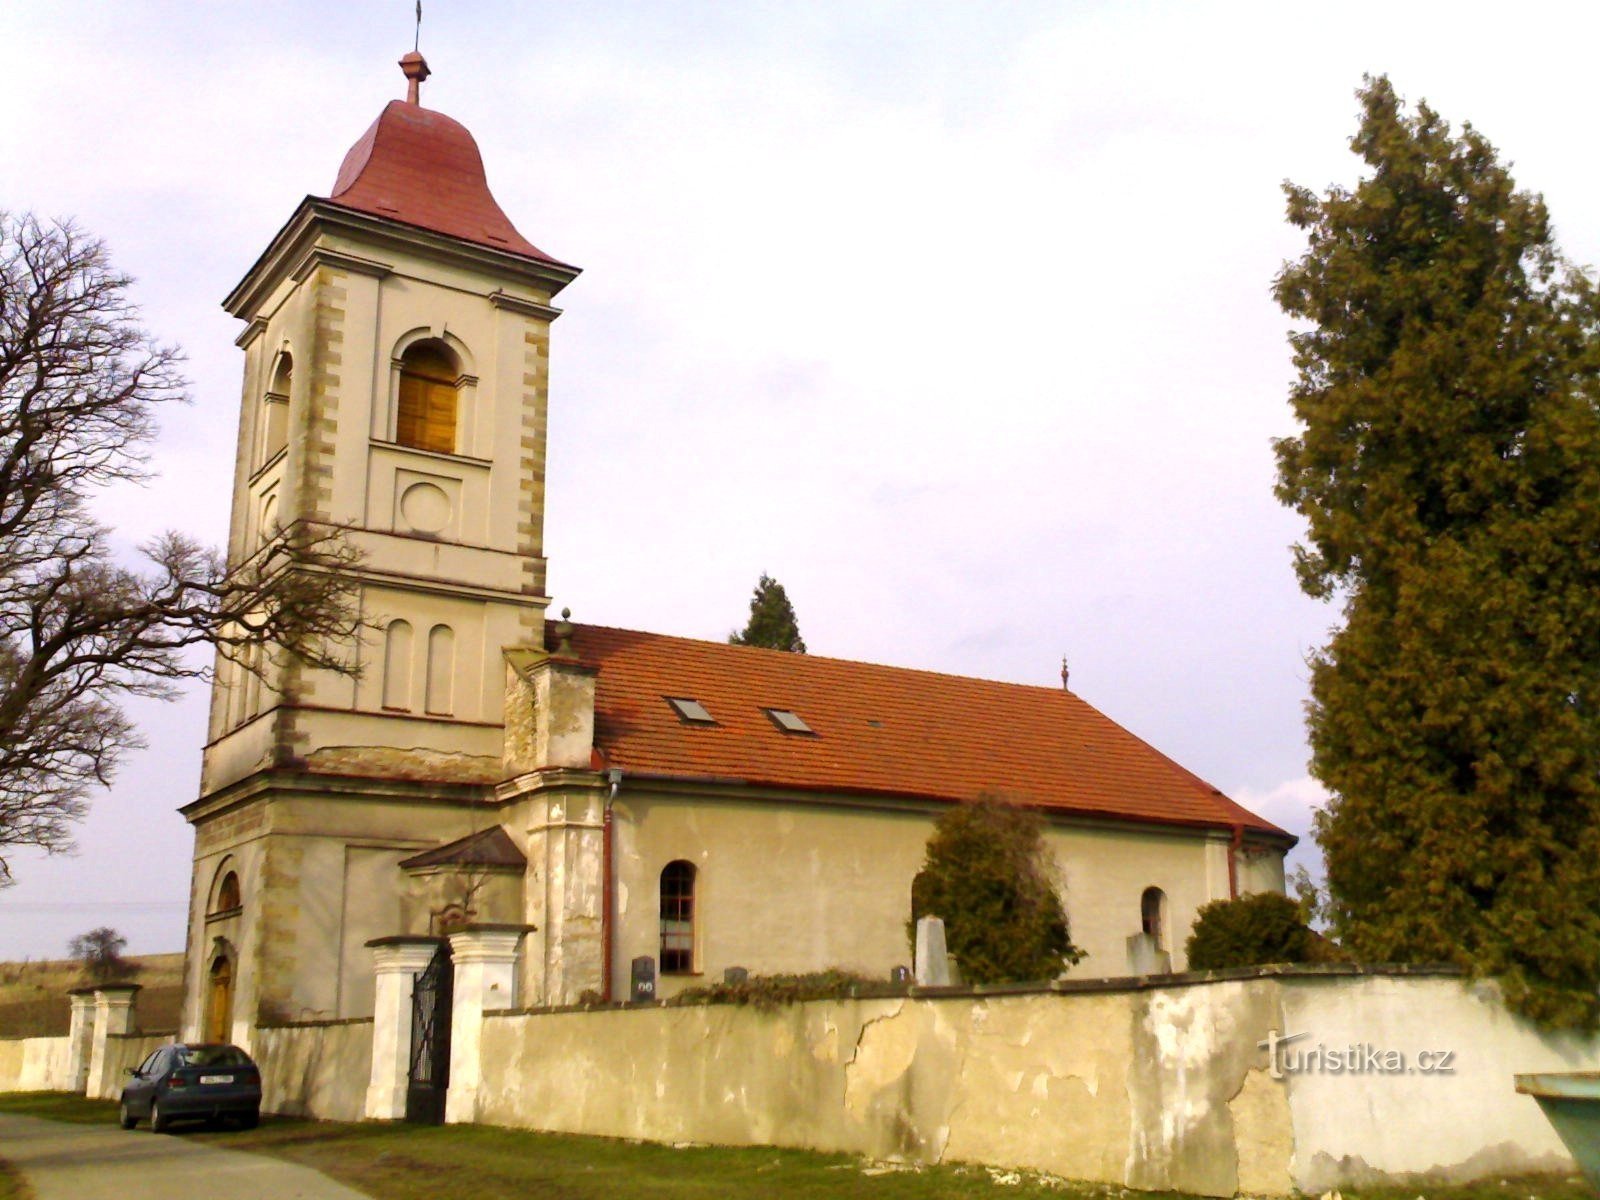 Klášter nad Dědinou - a Cseh Evangélikus Testvérek temploma